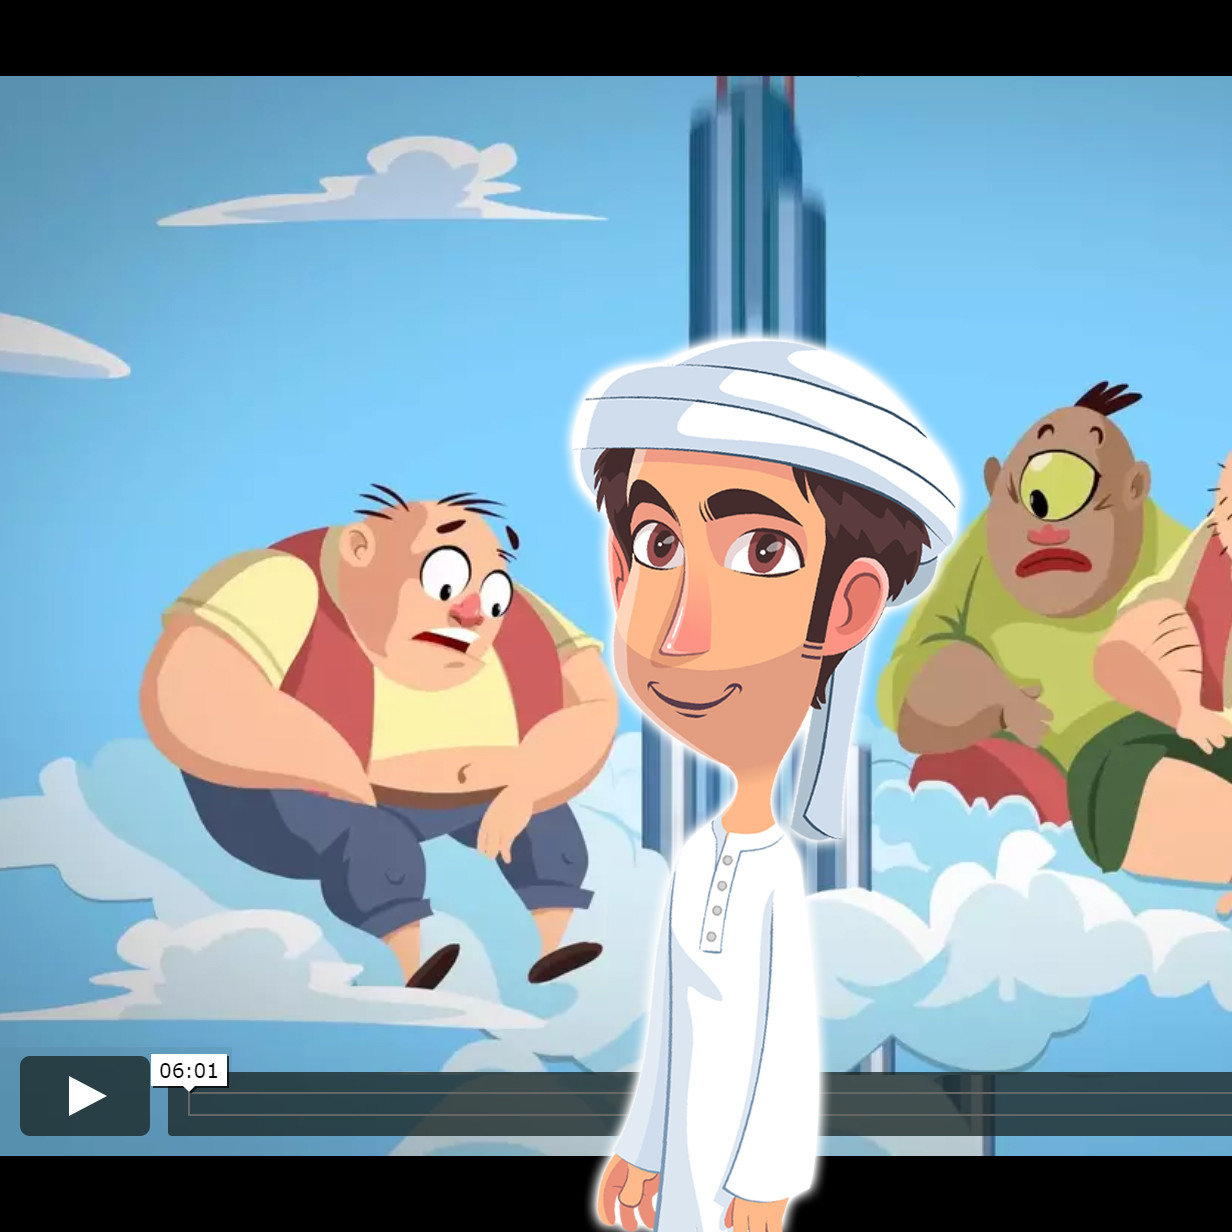 ArtStation - Burj Khalifa Animated Documentary